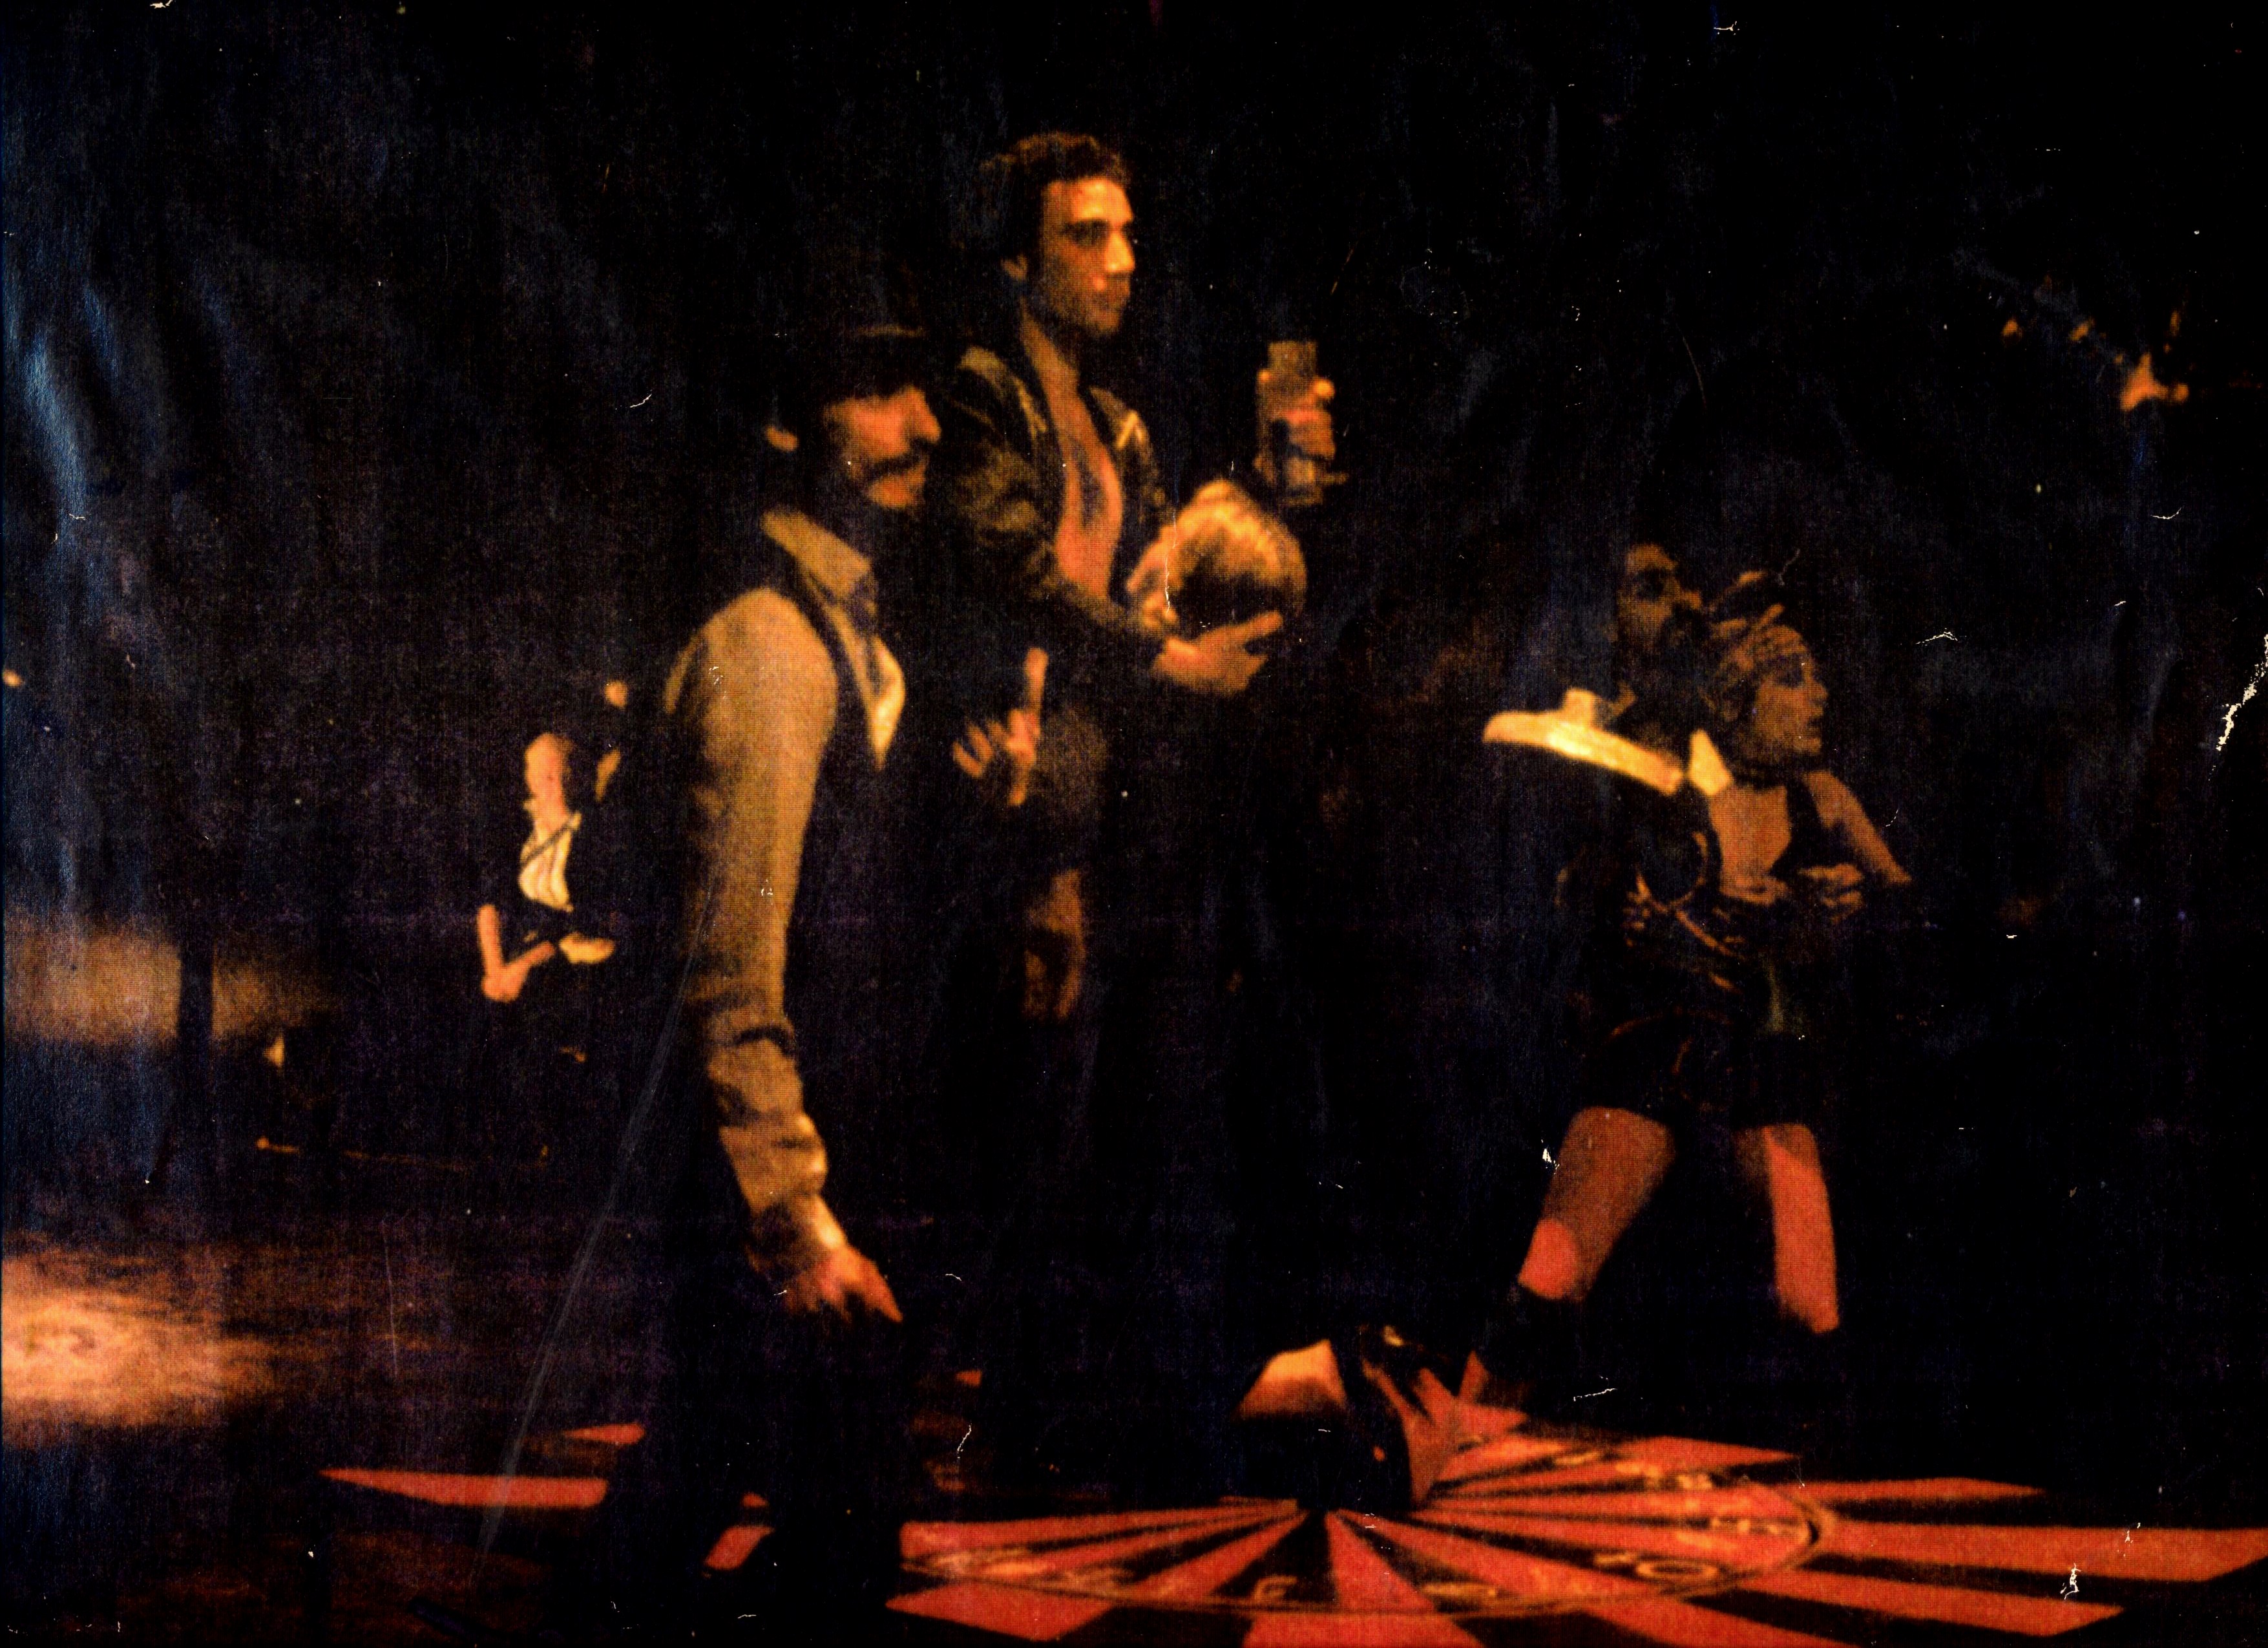 Actors Julio Hormaeche (Baal) Jorge Montenegro, Alejandro Mondaini, Andrea Lallana and Gabriela Macheret in Brechtian performance.